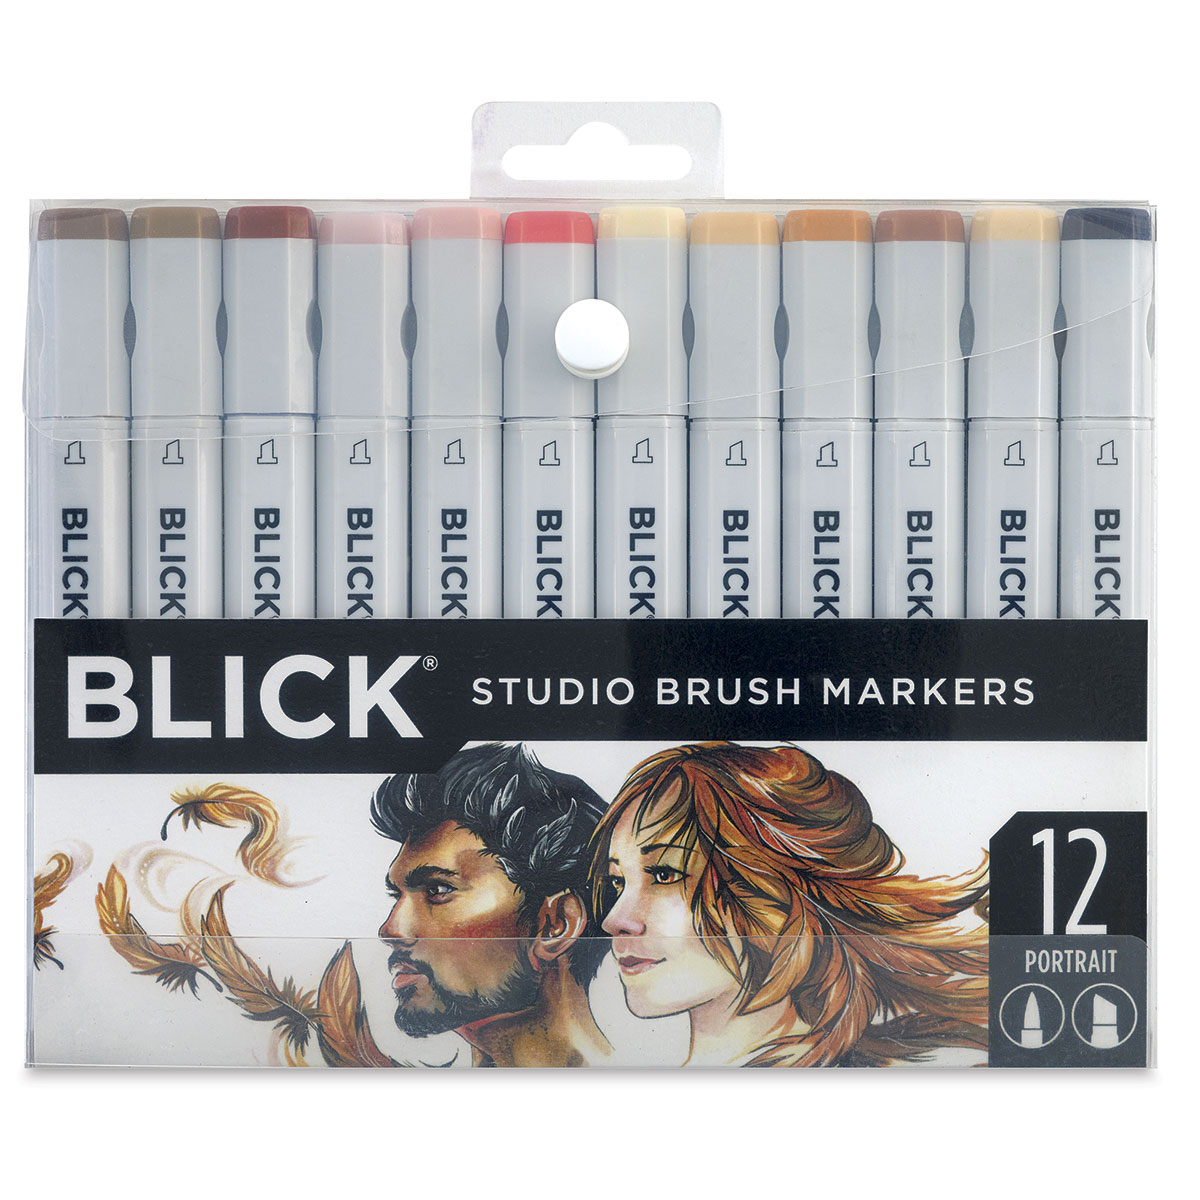 Printable swatch sheet for Blick Studio Brush Markers – Jason's Web Site